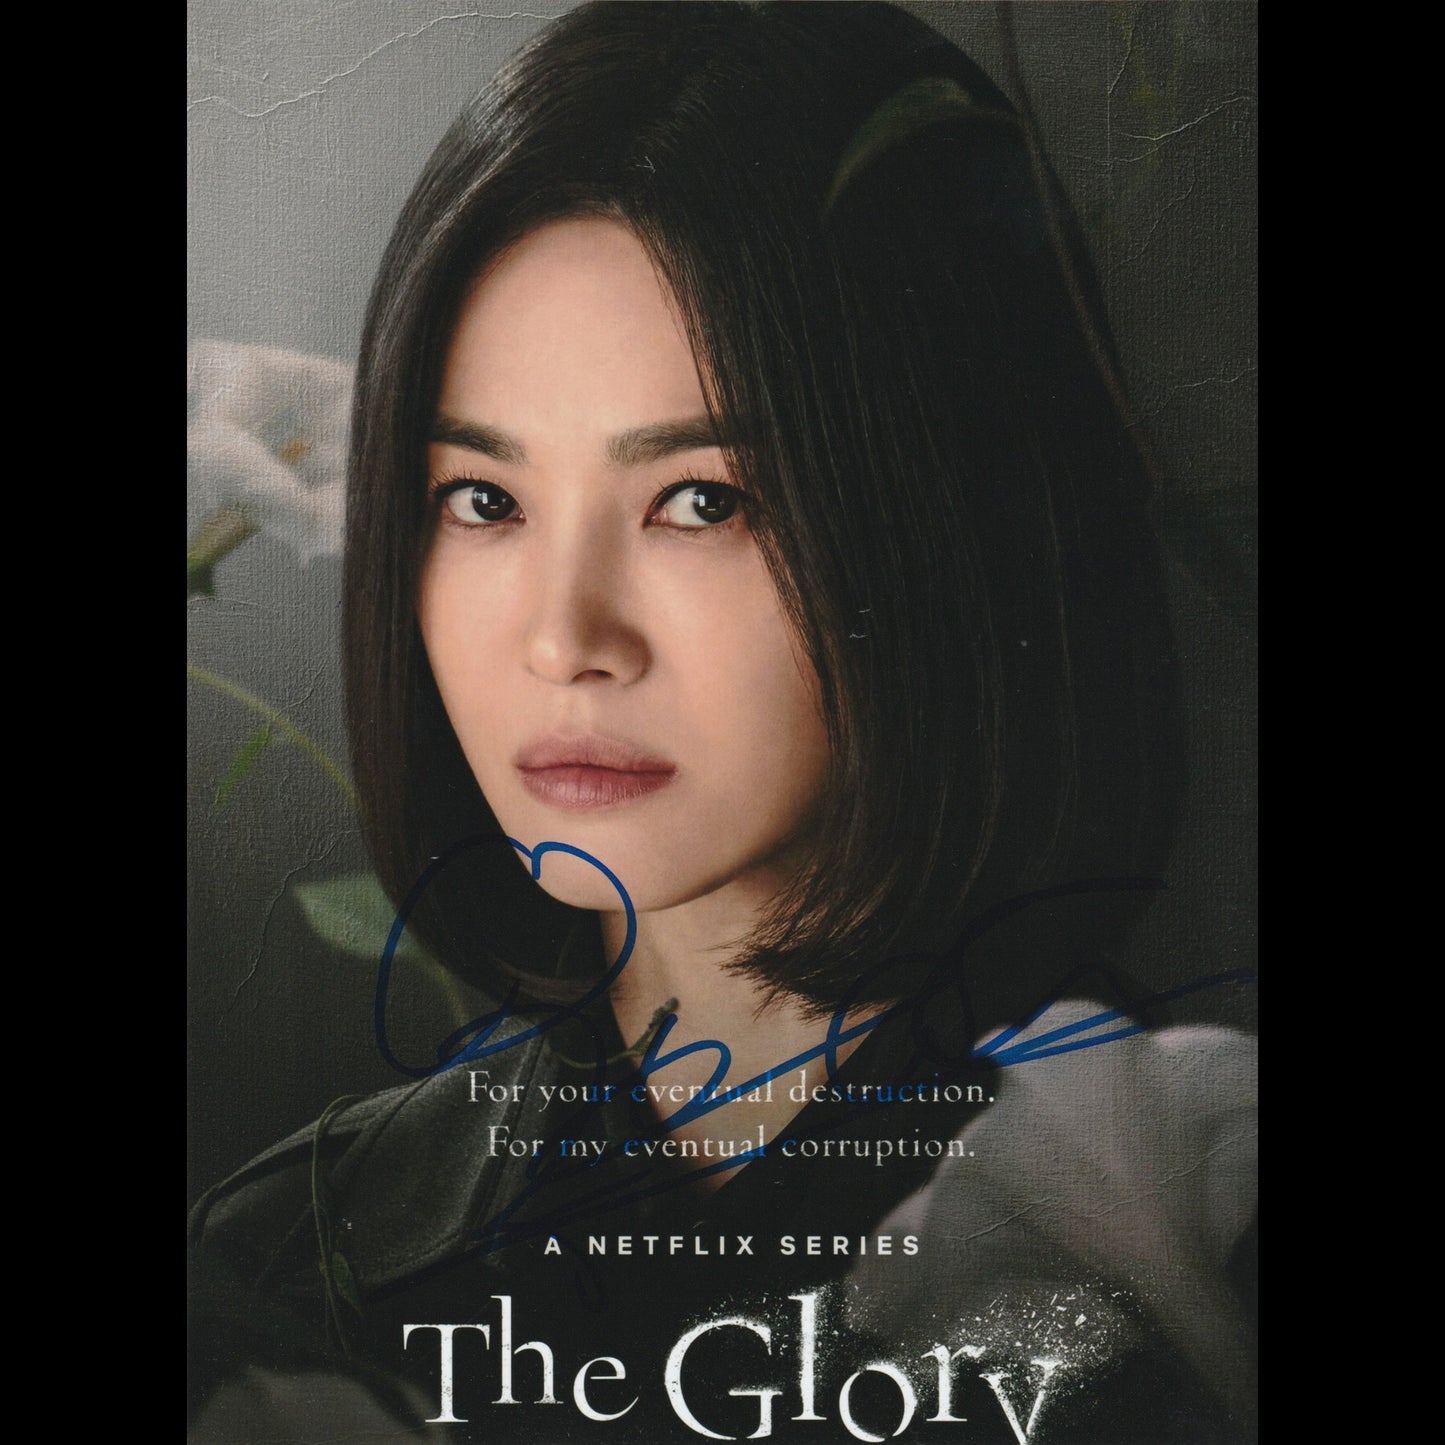 Song HYE-KYO (The Glory)